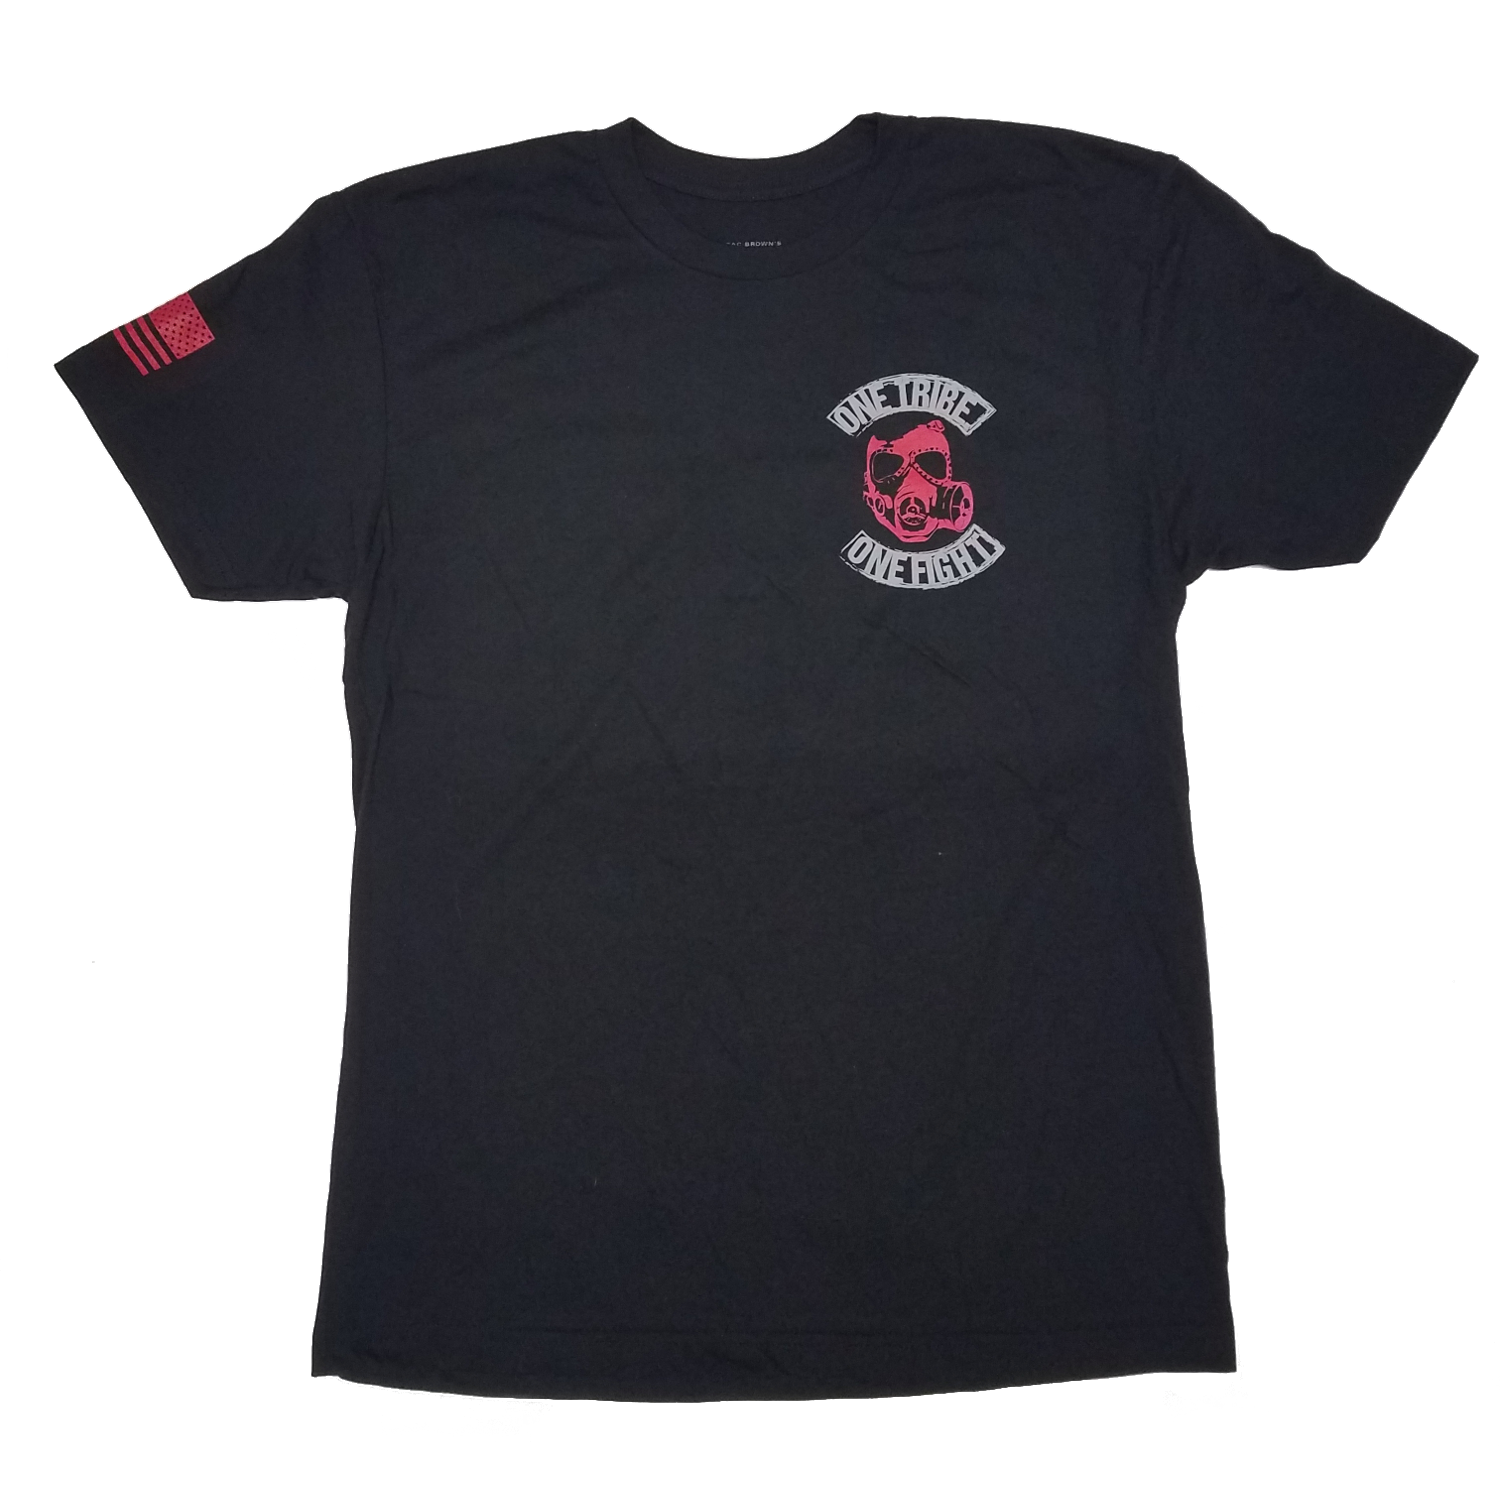 "OG" 22KILL t-shirt in black. One Tribe. One Fight. 